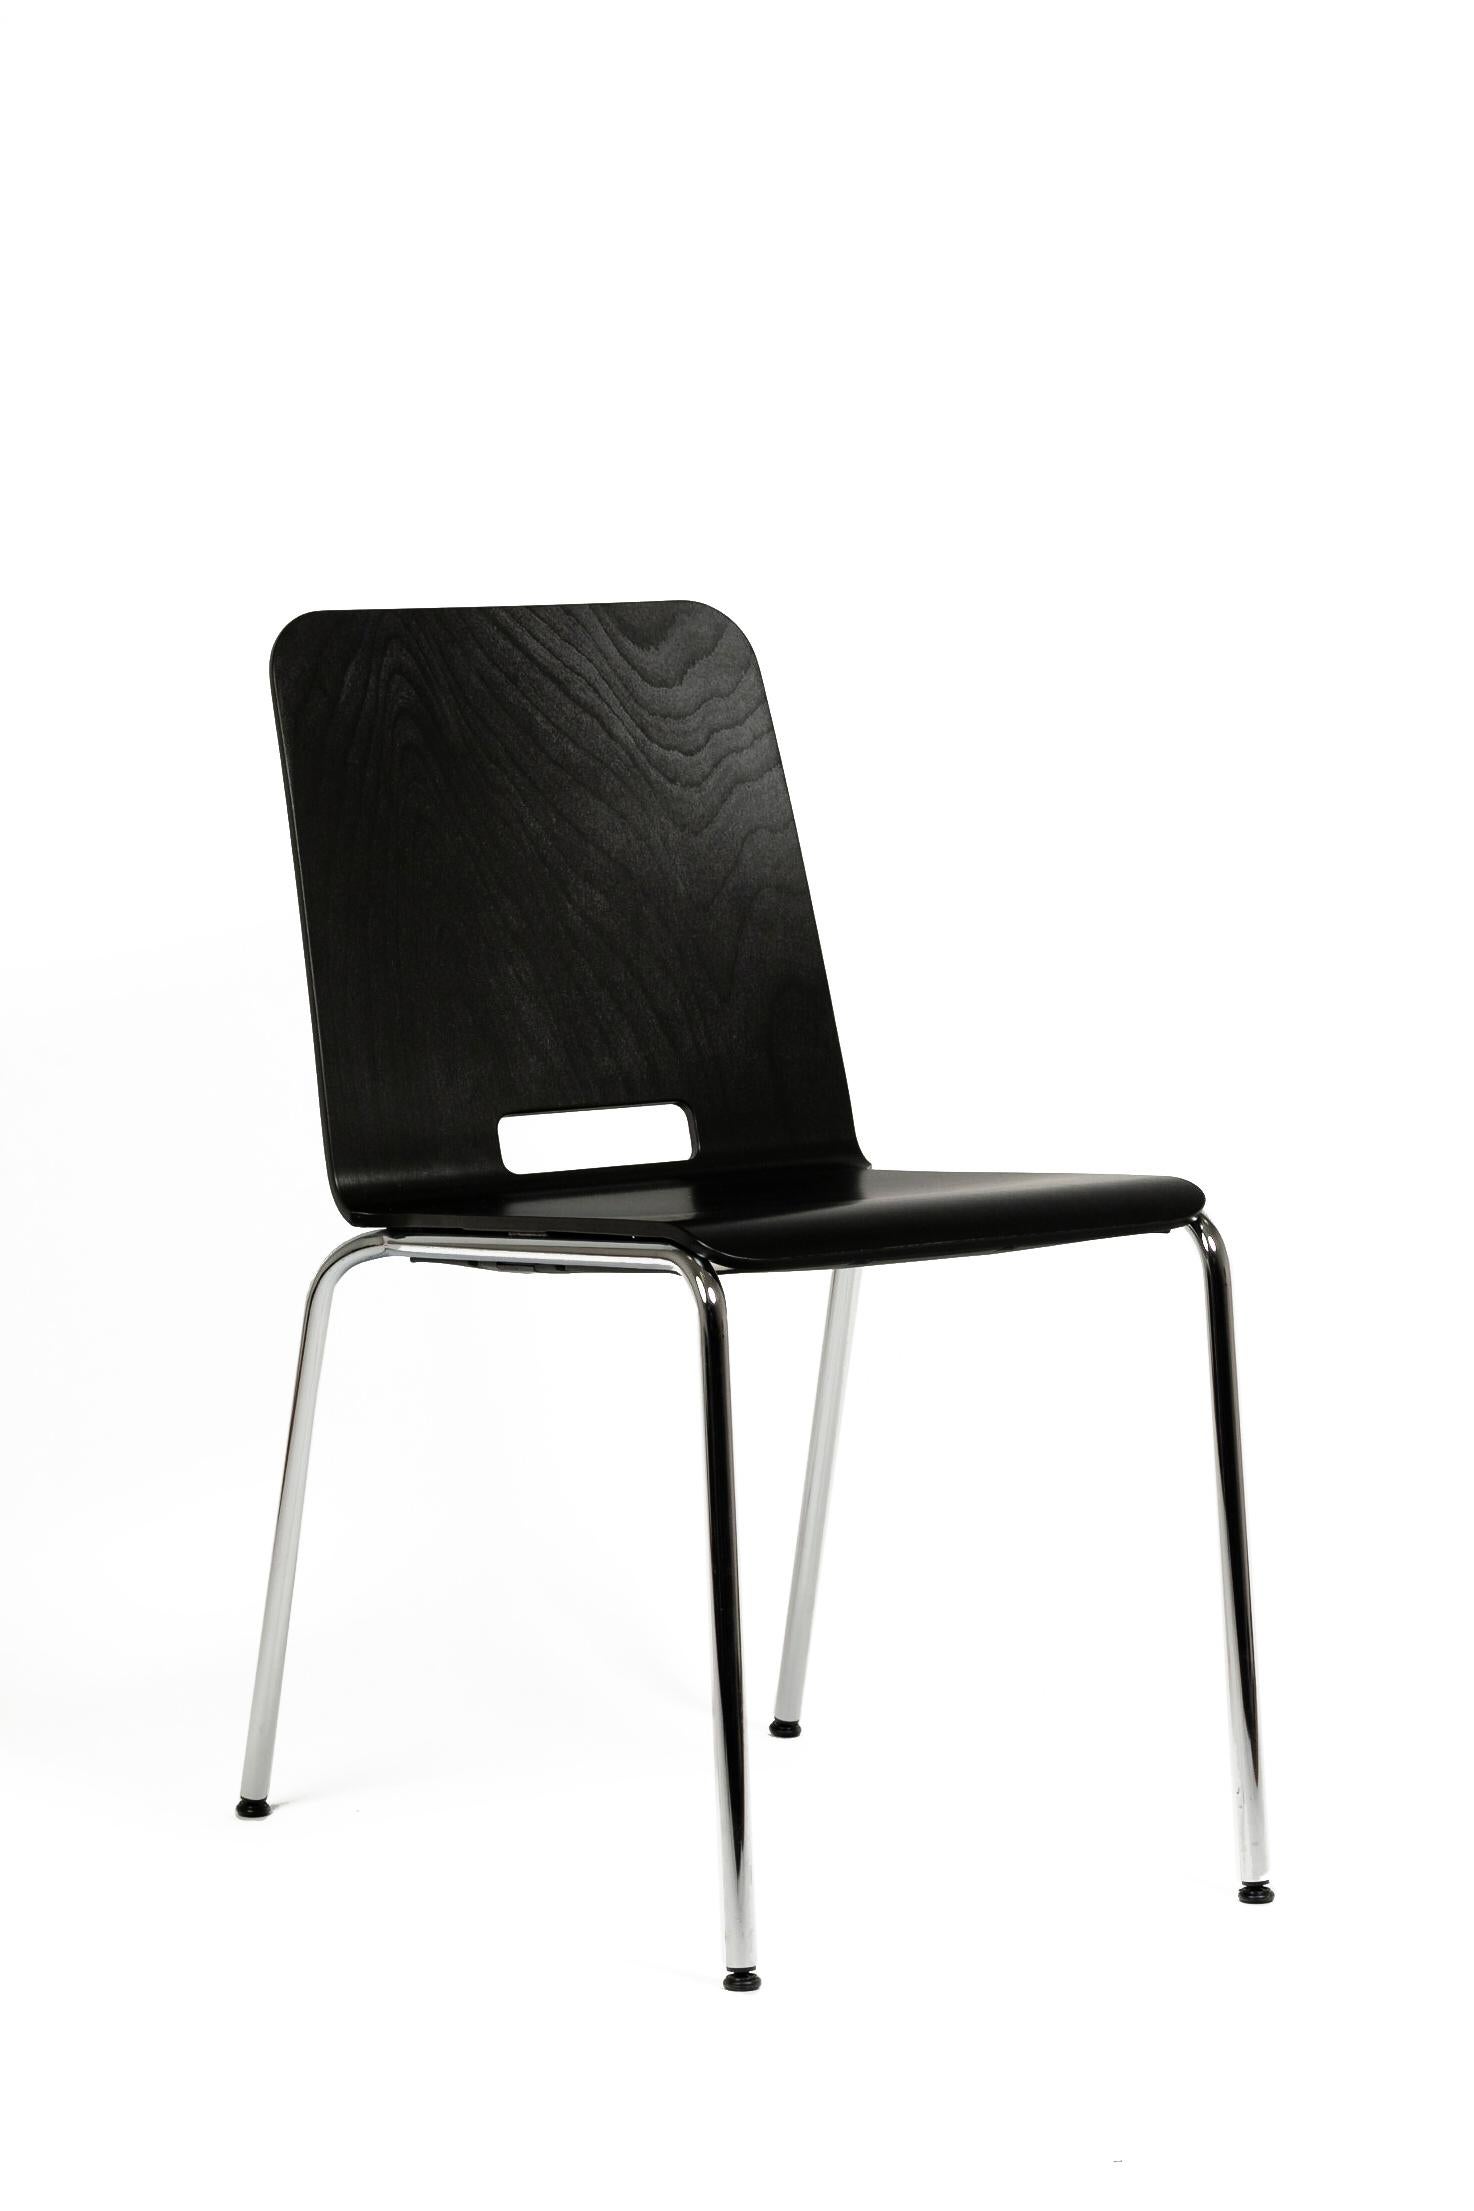 Swiss 4-Set Dietiker Alta, Modern Wood Black Chairs, by Greutmann Bolzern, in Stock